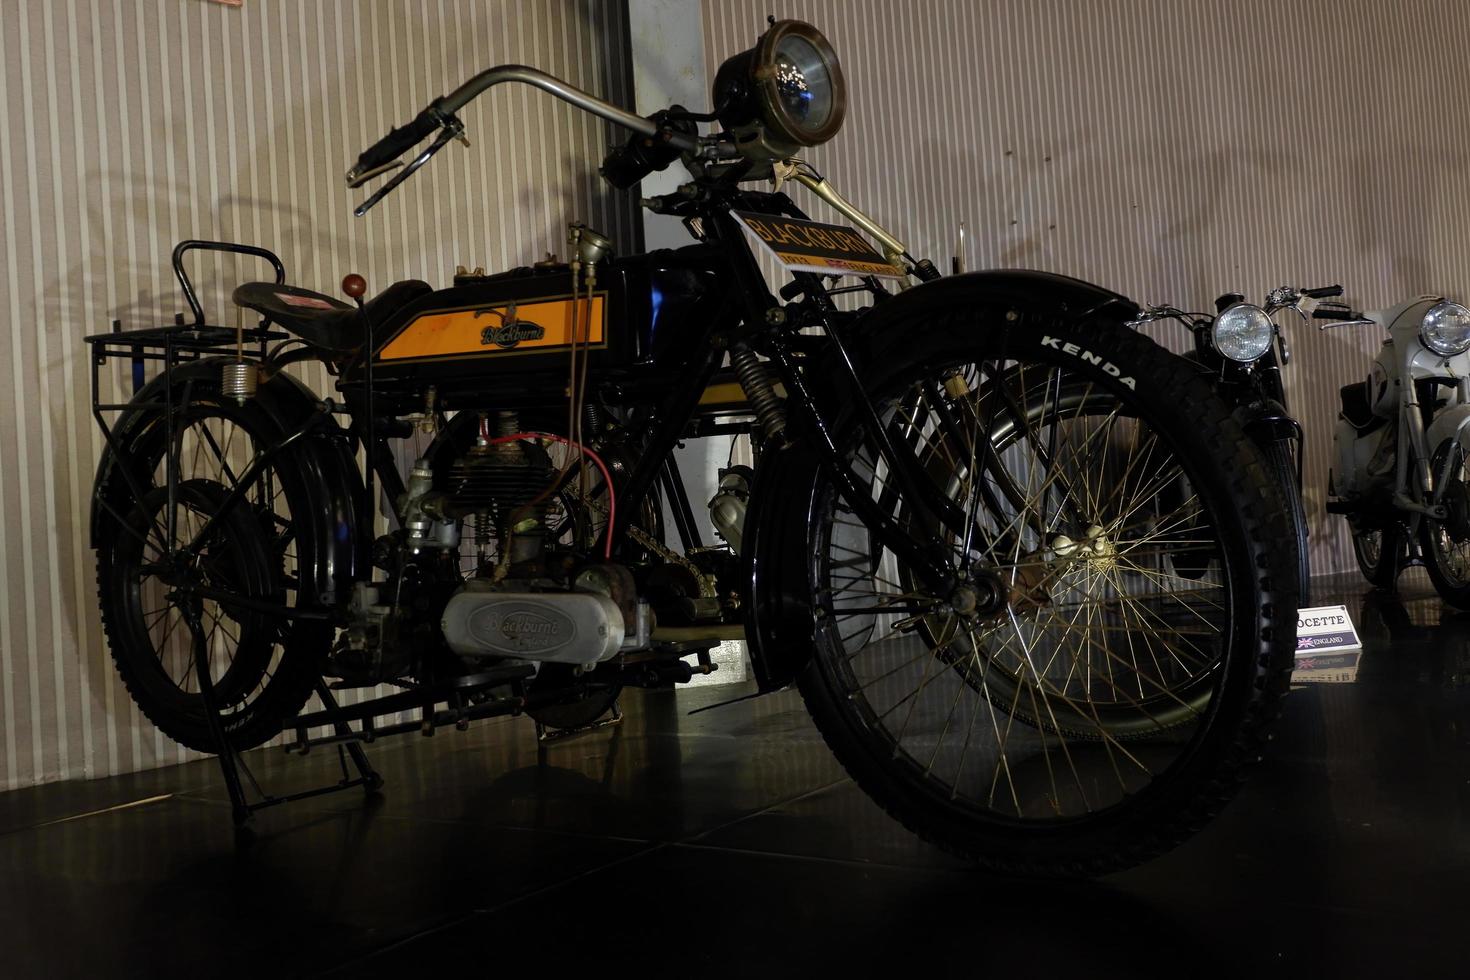 batu, java oriental, indonésia - 10 de agosto de 2022, moto blackburn, moto preta antiga no museu angkut foto